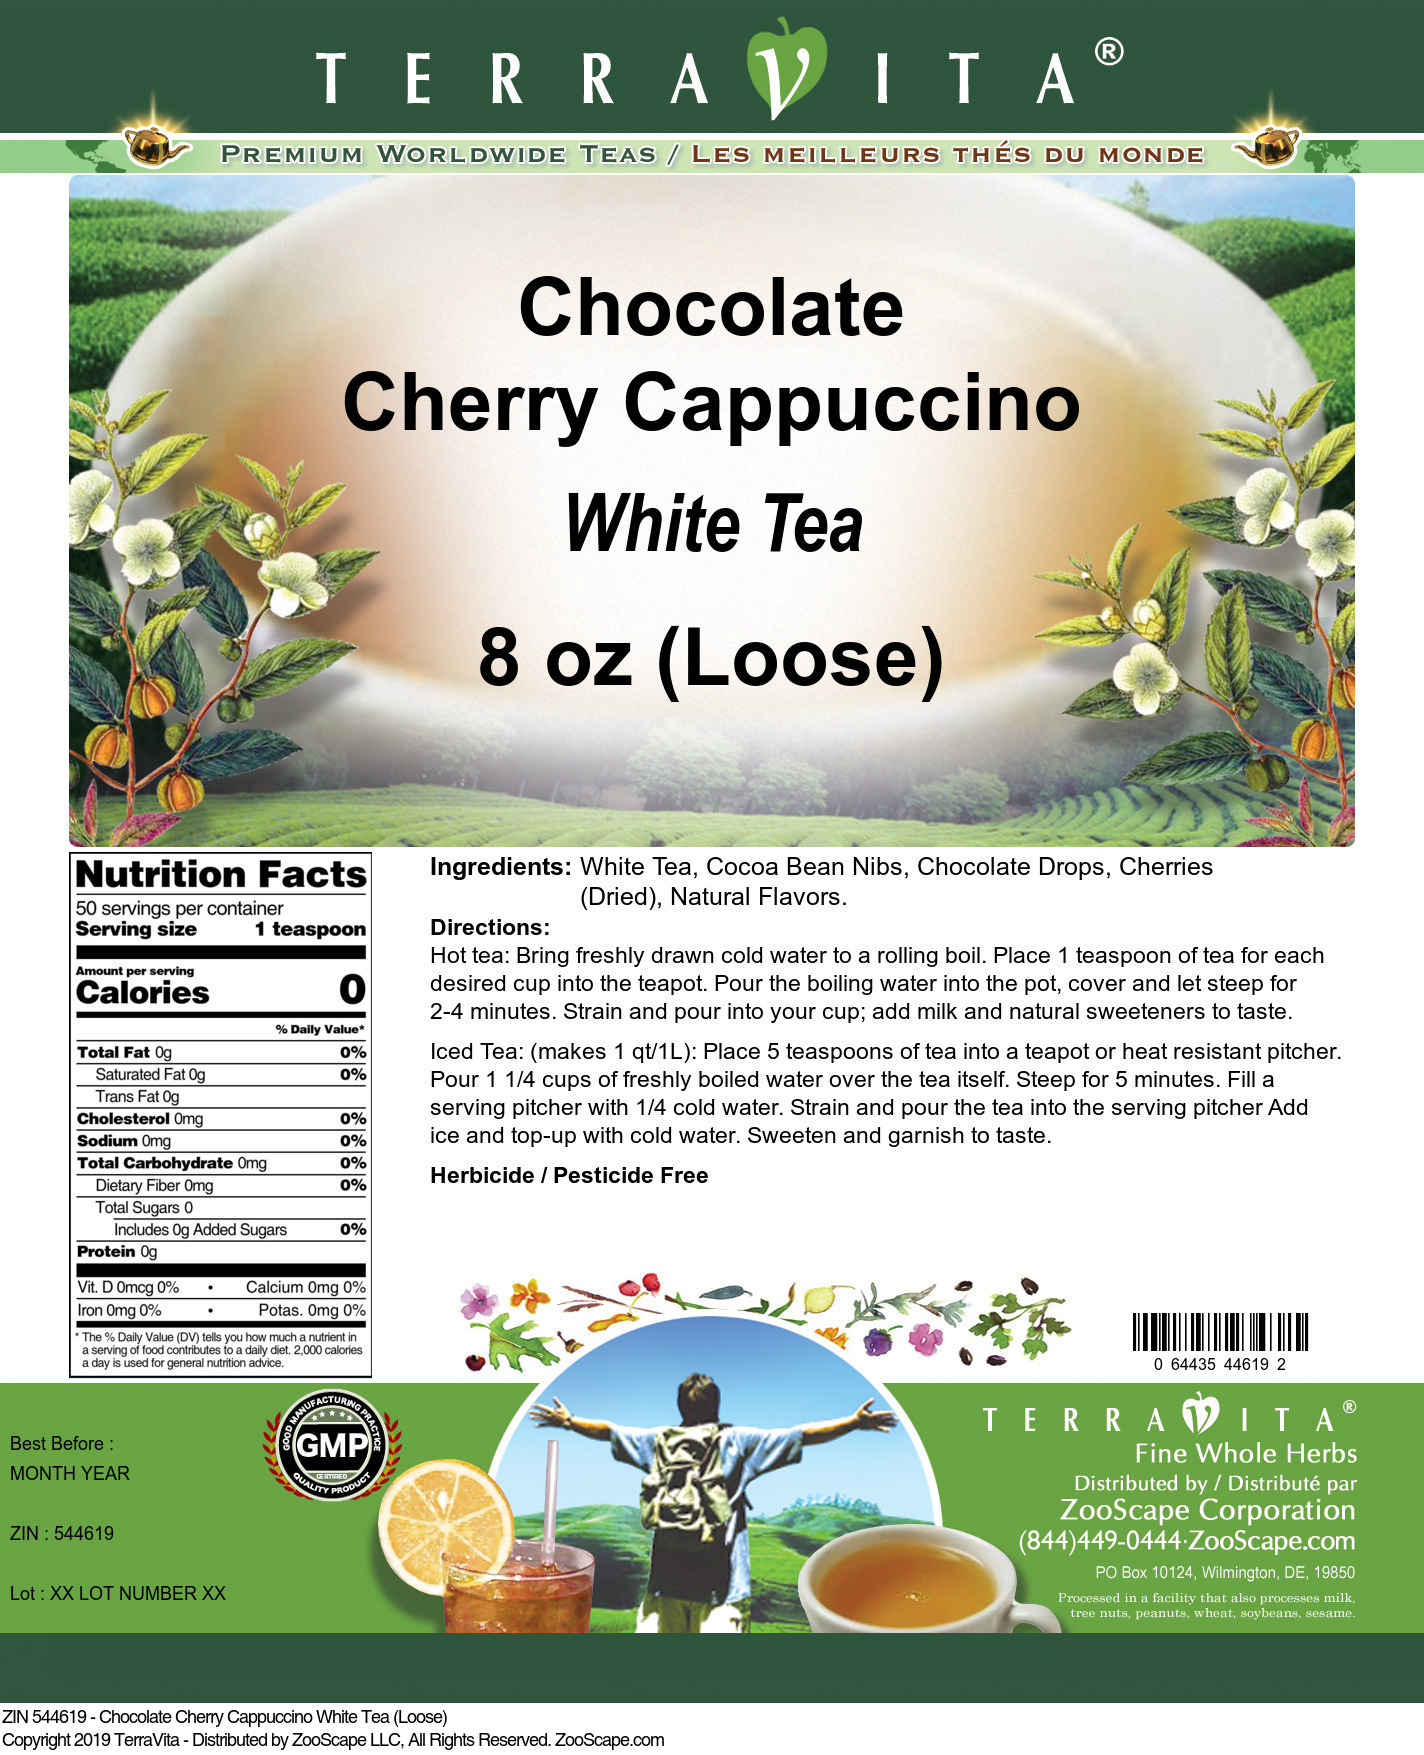 Chocolate Cherry Cappuccino White Tea (Loose) - Label